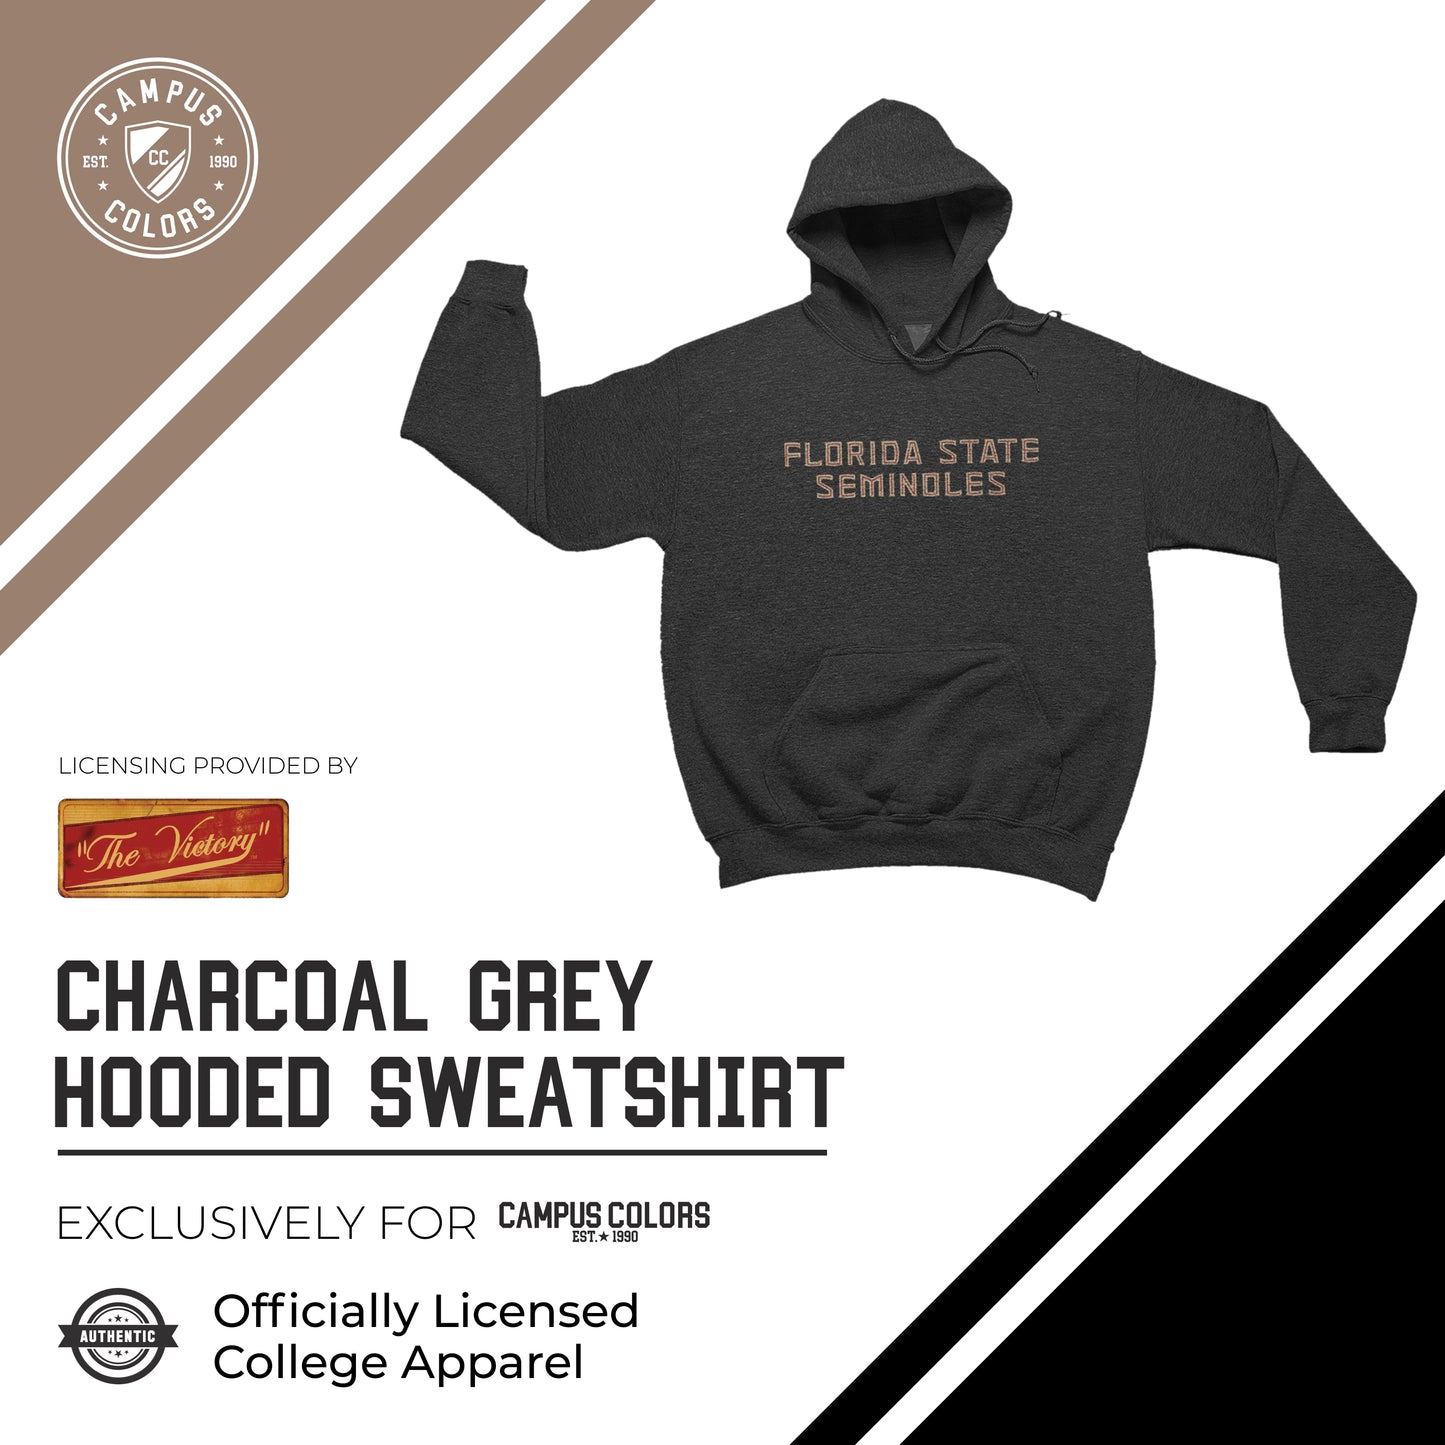 Florida State Seminoles NCAA Adult Cotton Blend Charcoal Hooded Sweatshirt - Charcoal